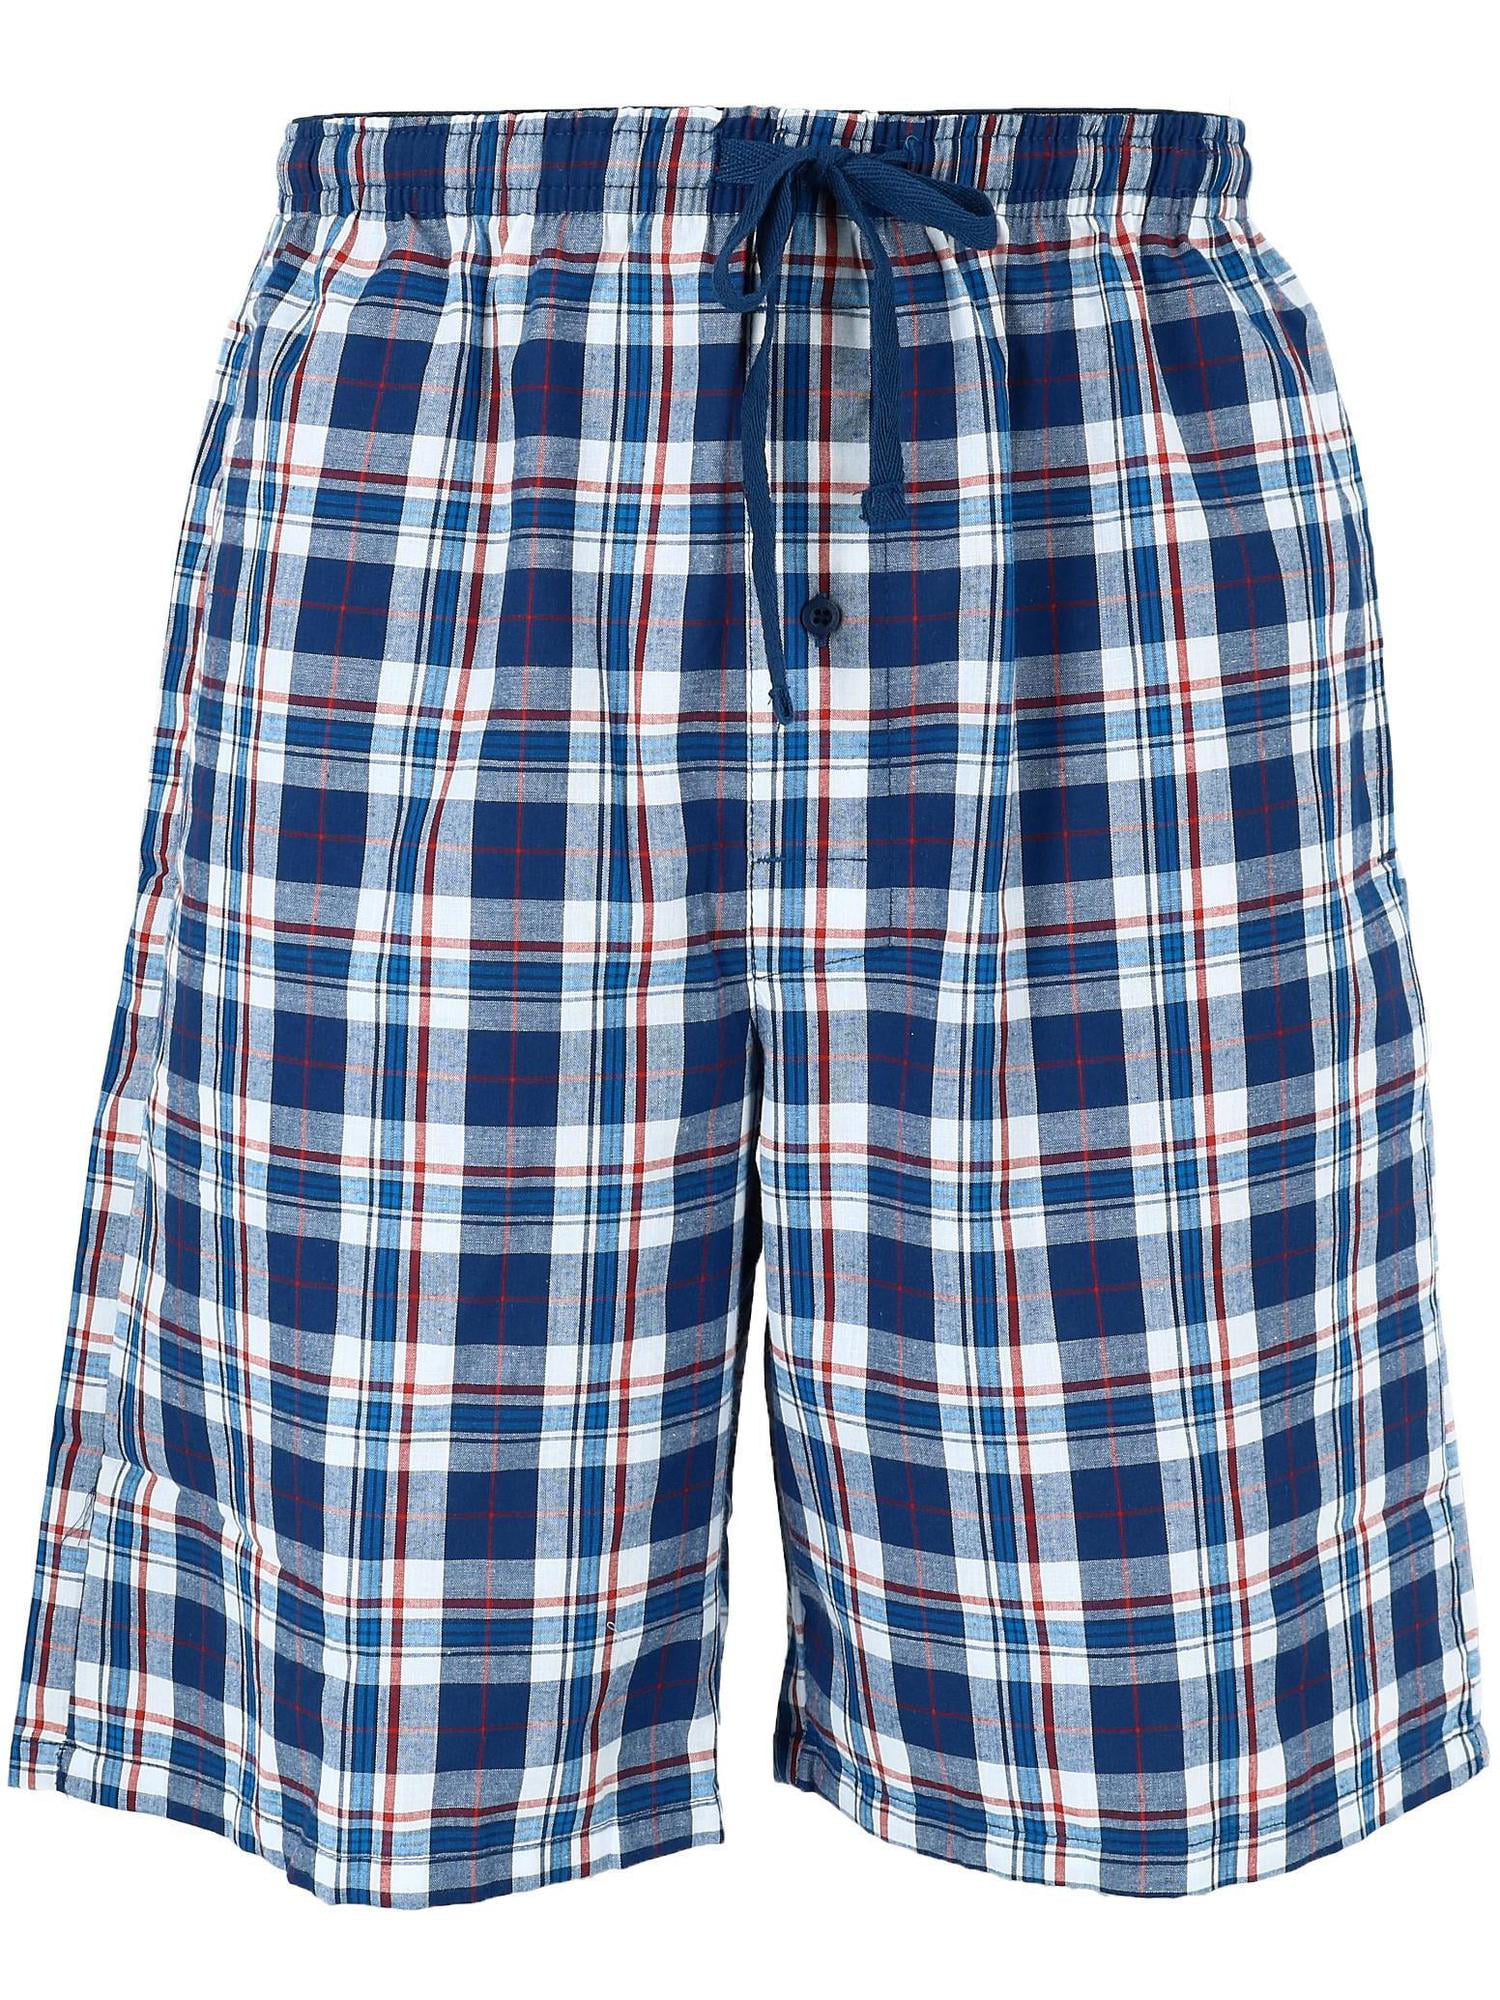 Hanes - Hanes Cotton Madras Drawstring Sleep Pajama Shorts (Men's ...